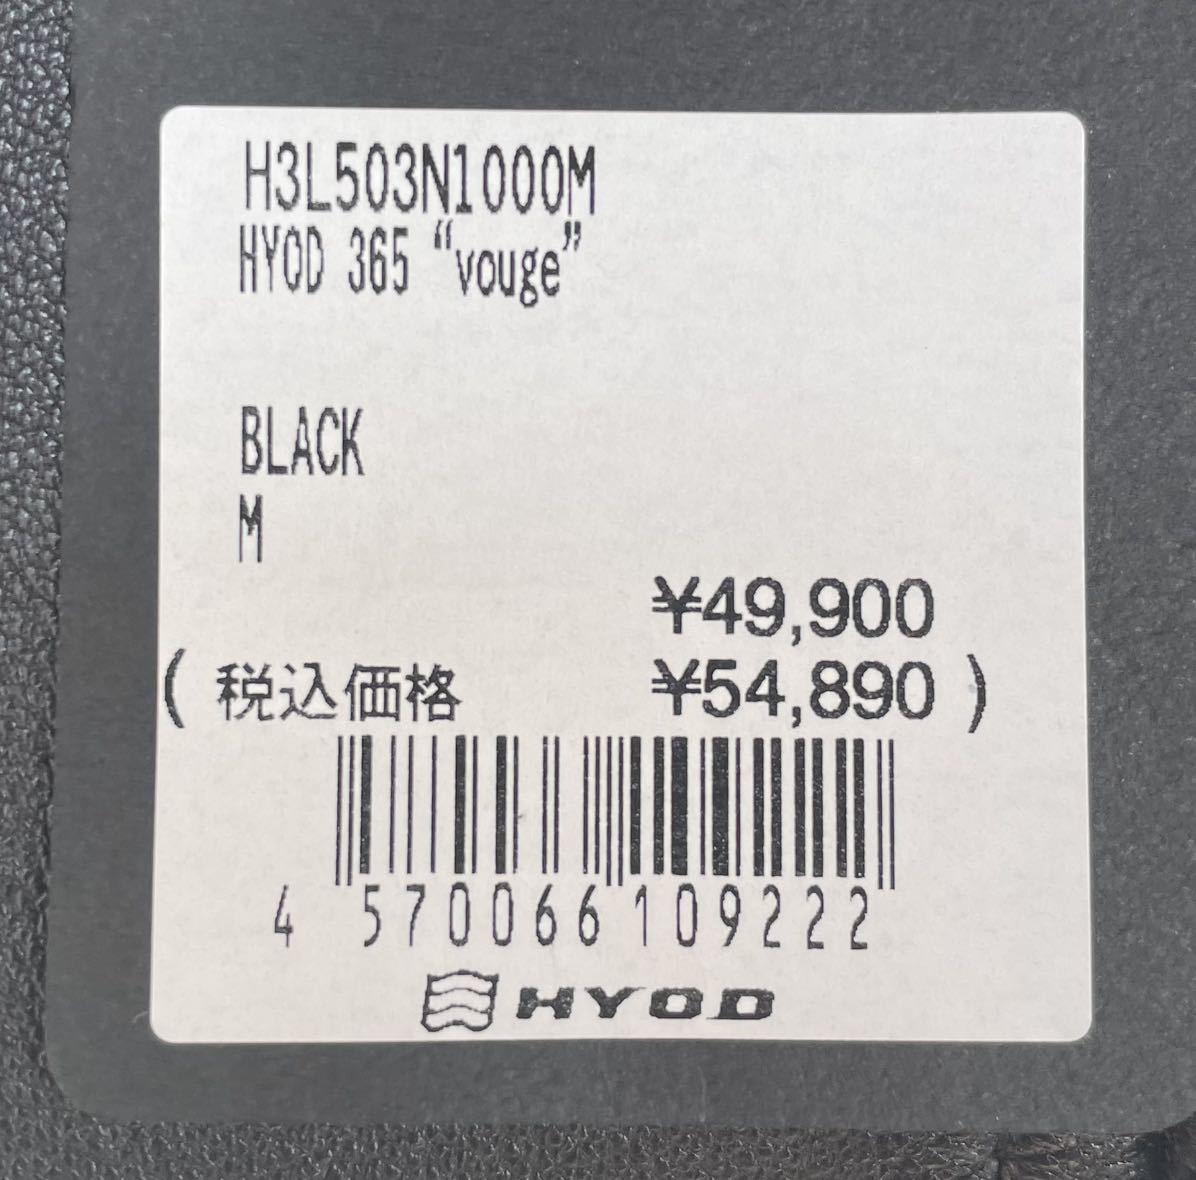 H3L503N HYOD 365 “vouge” Mサイズ 新品 レザージャケット_画像3